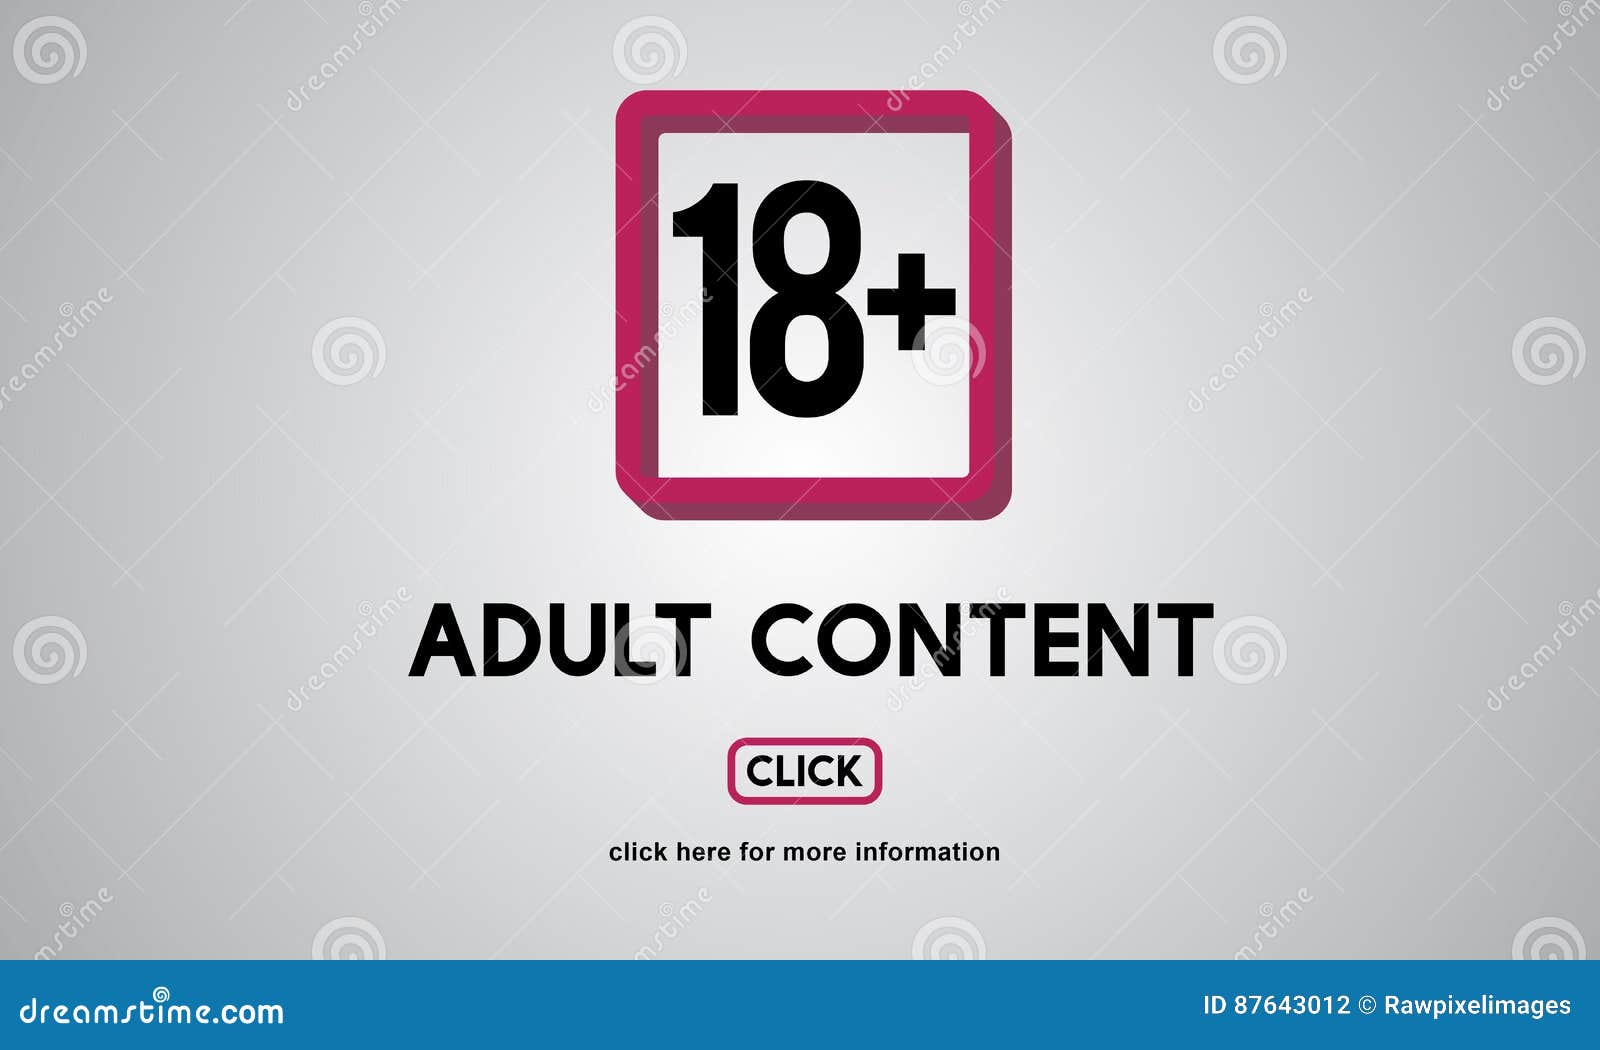 eighteen plus adult explicit content warning concept